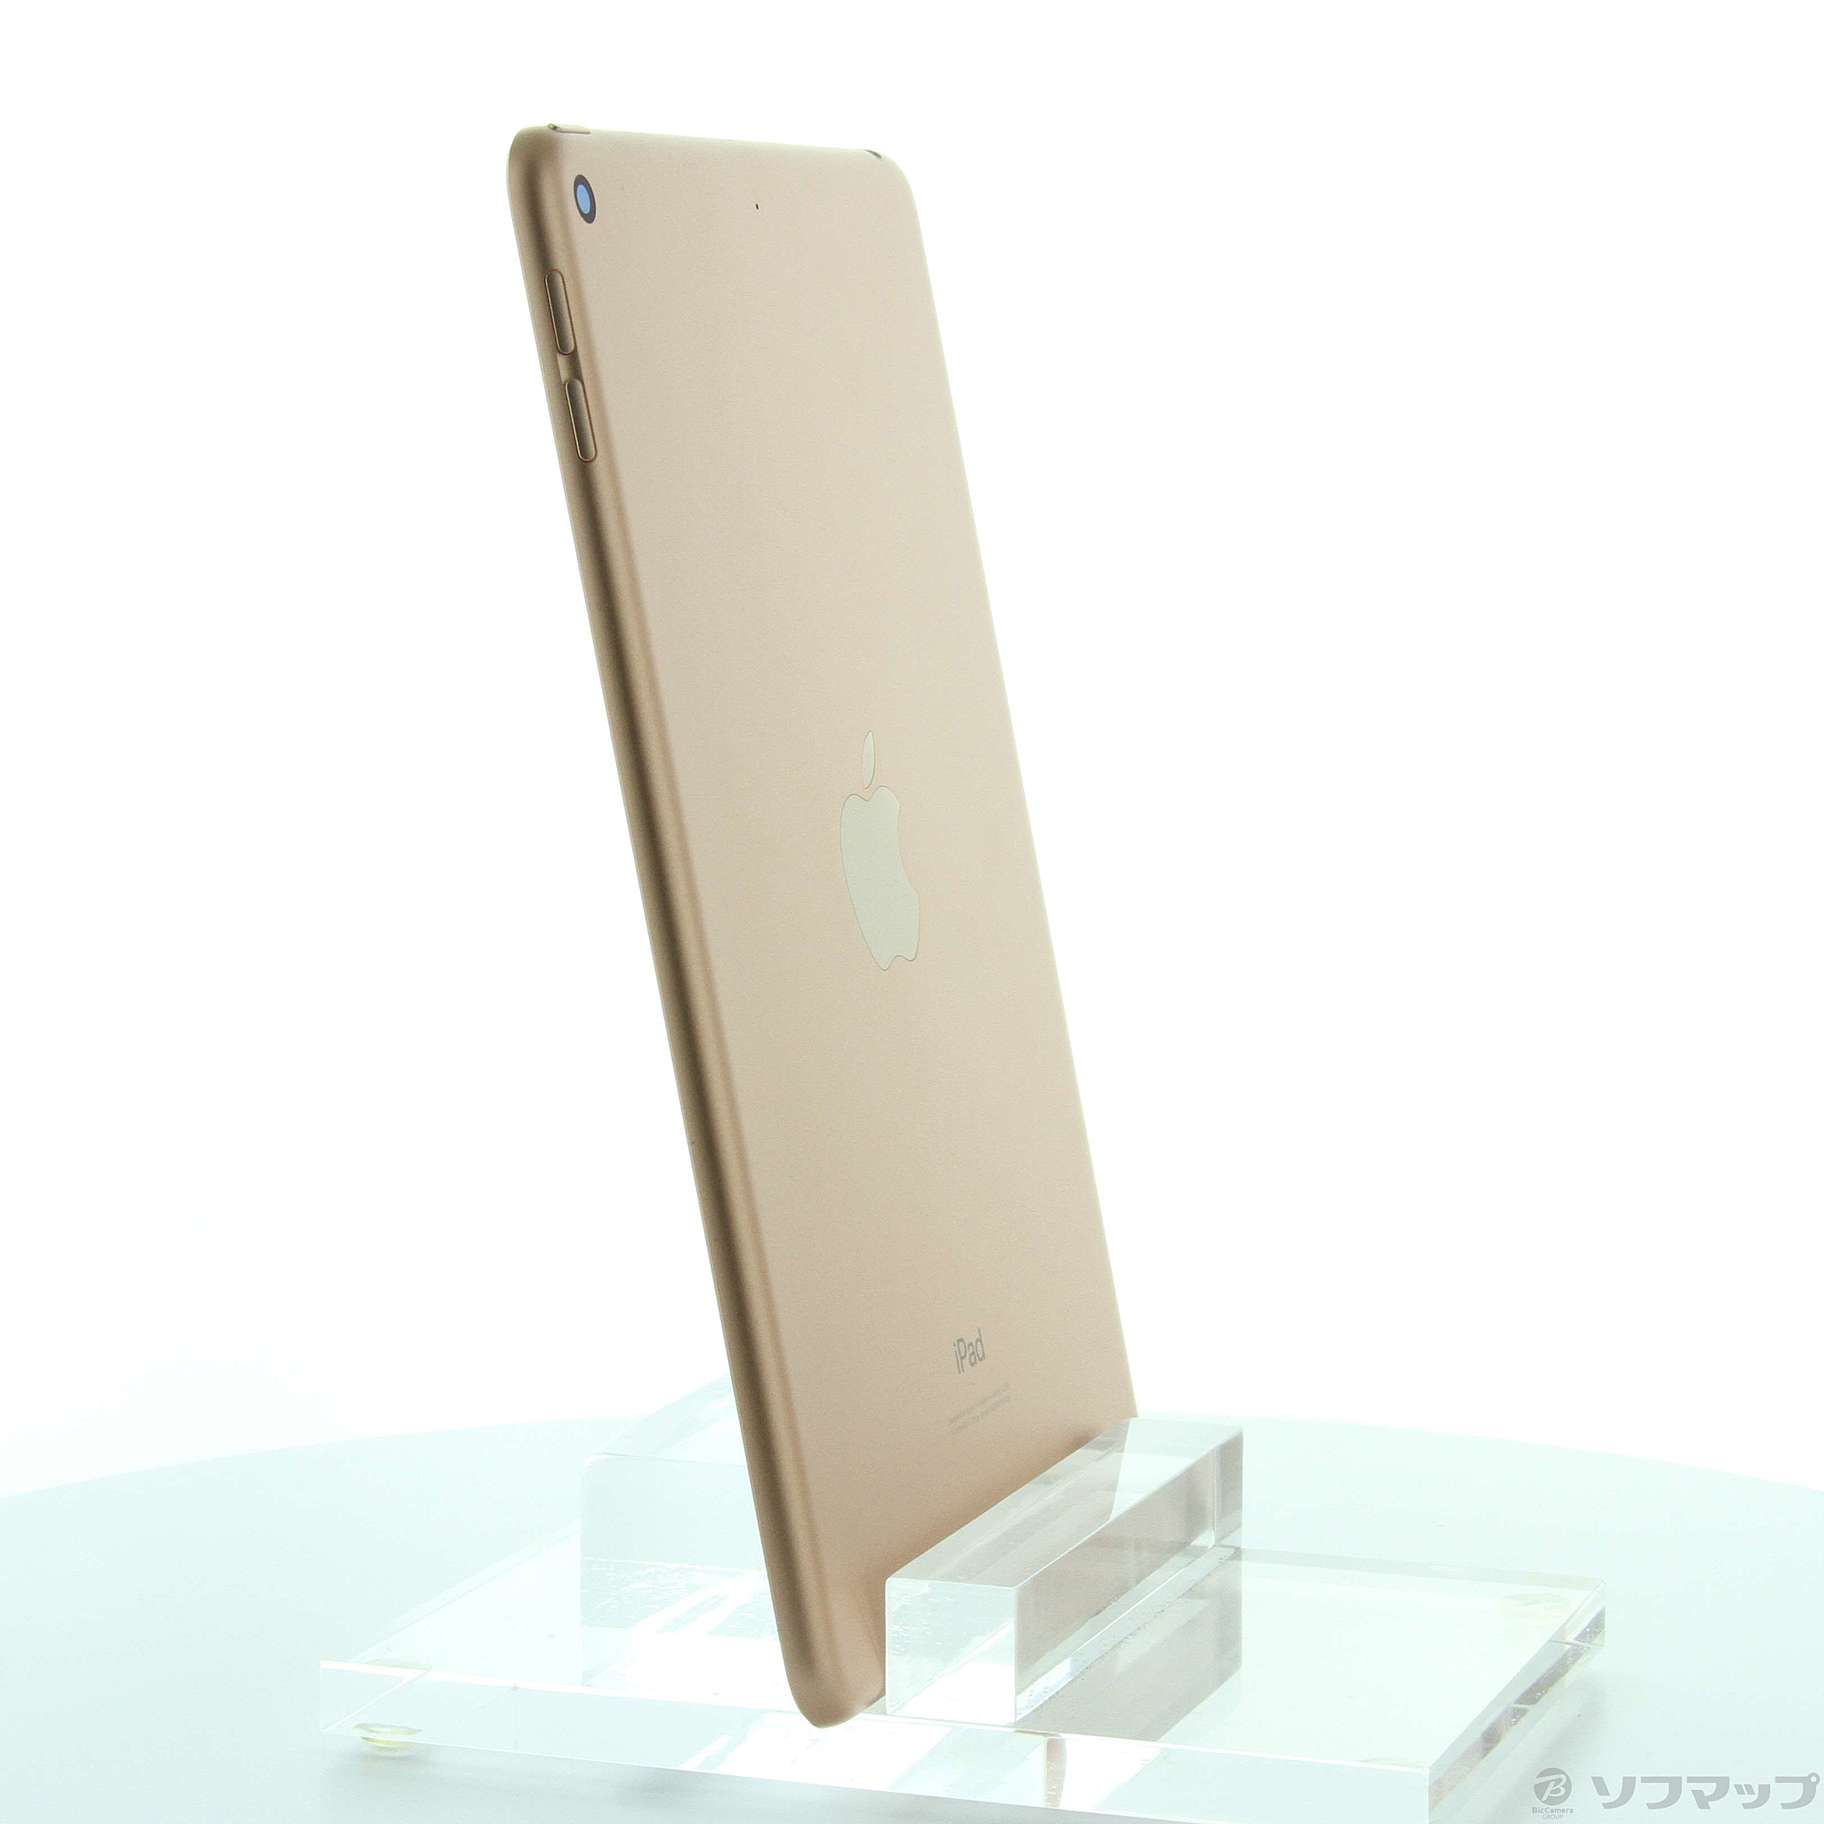 新品 iPad mini 第5 gold Wi-Fi+Cellular64GB